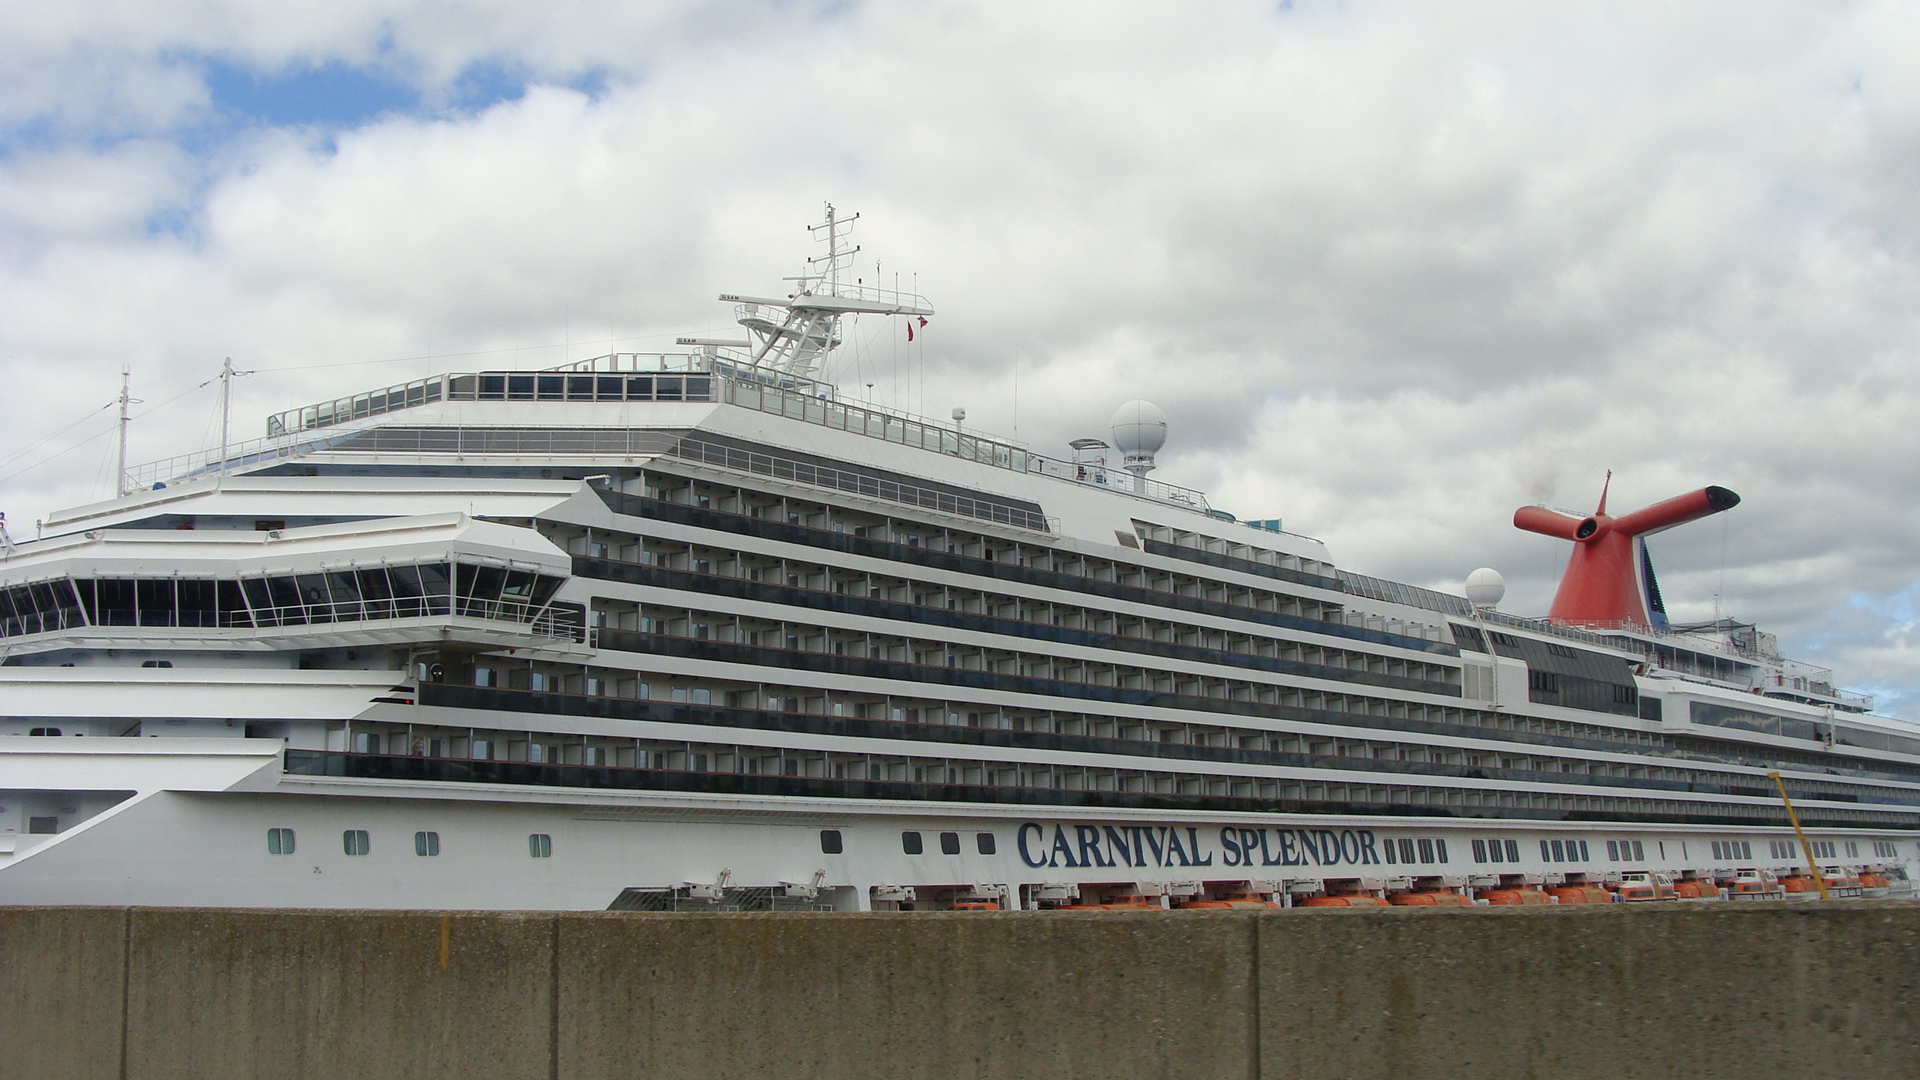 Carnival Splendor docked at Pier 90